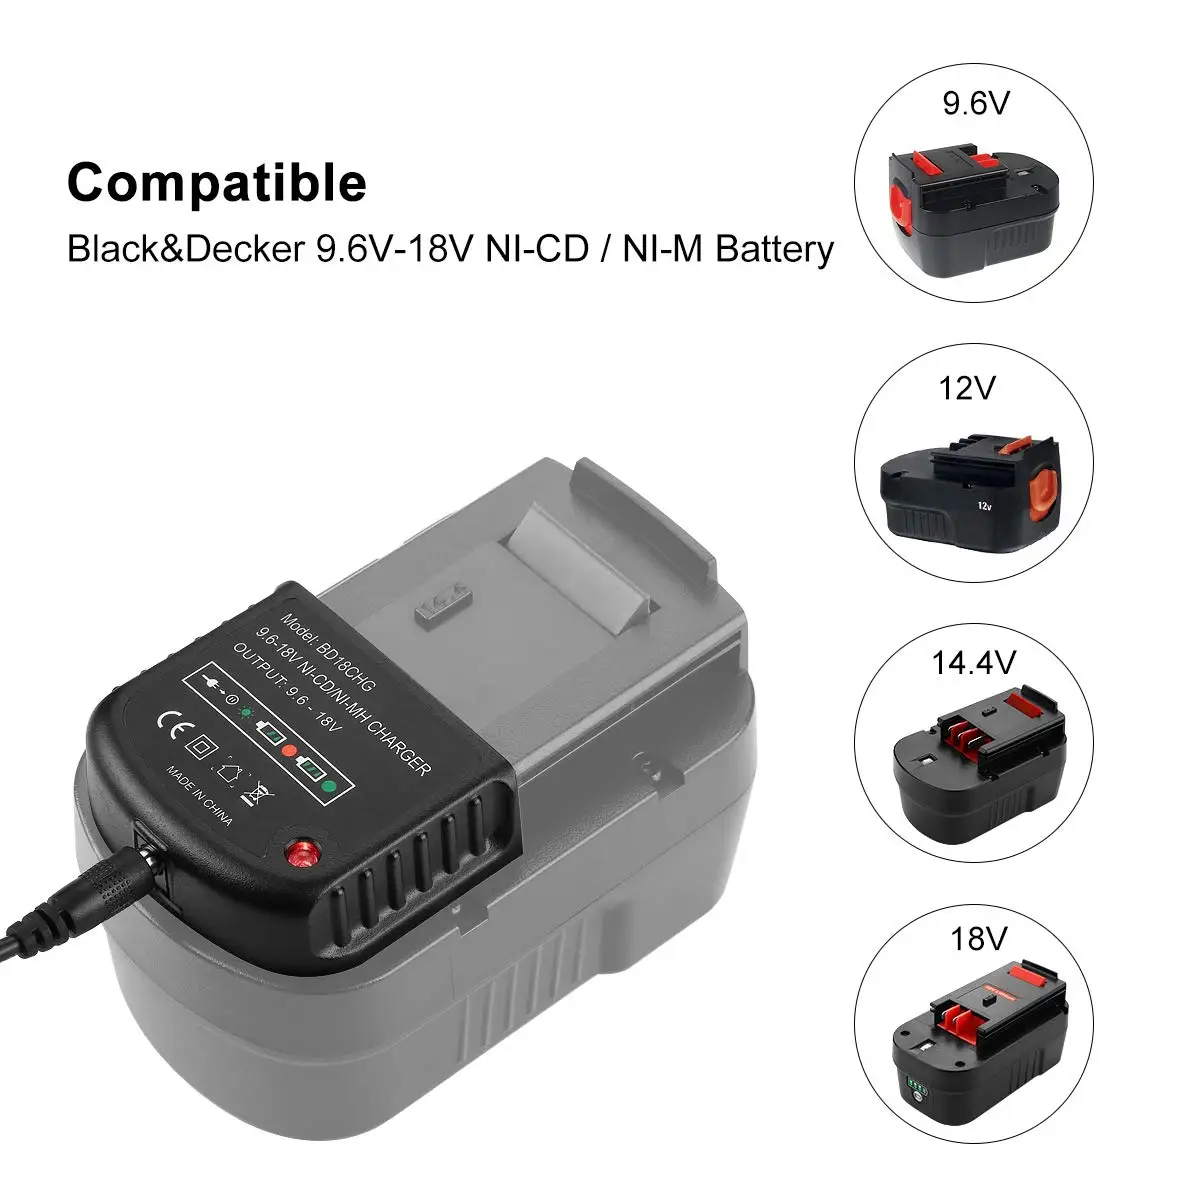 https://ae01.alicdn.com/kf/Sd504b49f07de4dbda810d8b7be6121day/9-6V-18V-Multi-Volt-Battery-Charger-For-Black-Decker-Ni-Cd-Ni-Mh-Battery-Hpb18.jpg